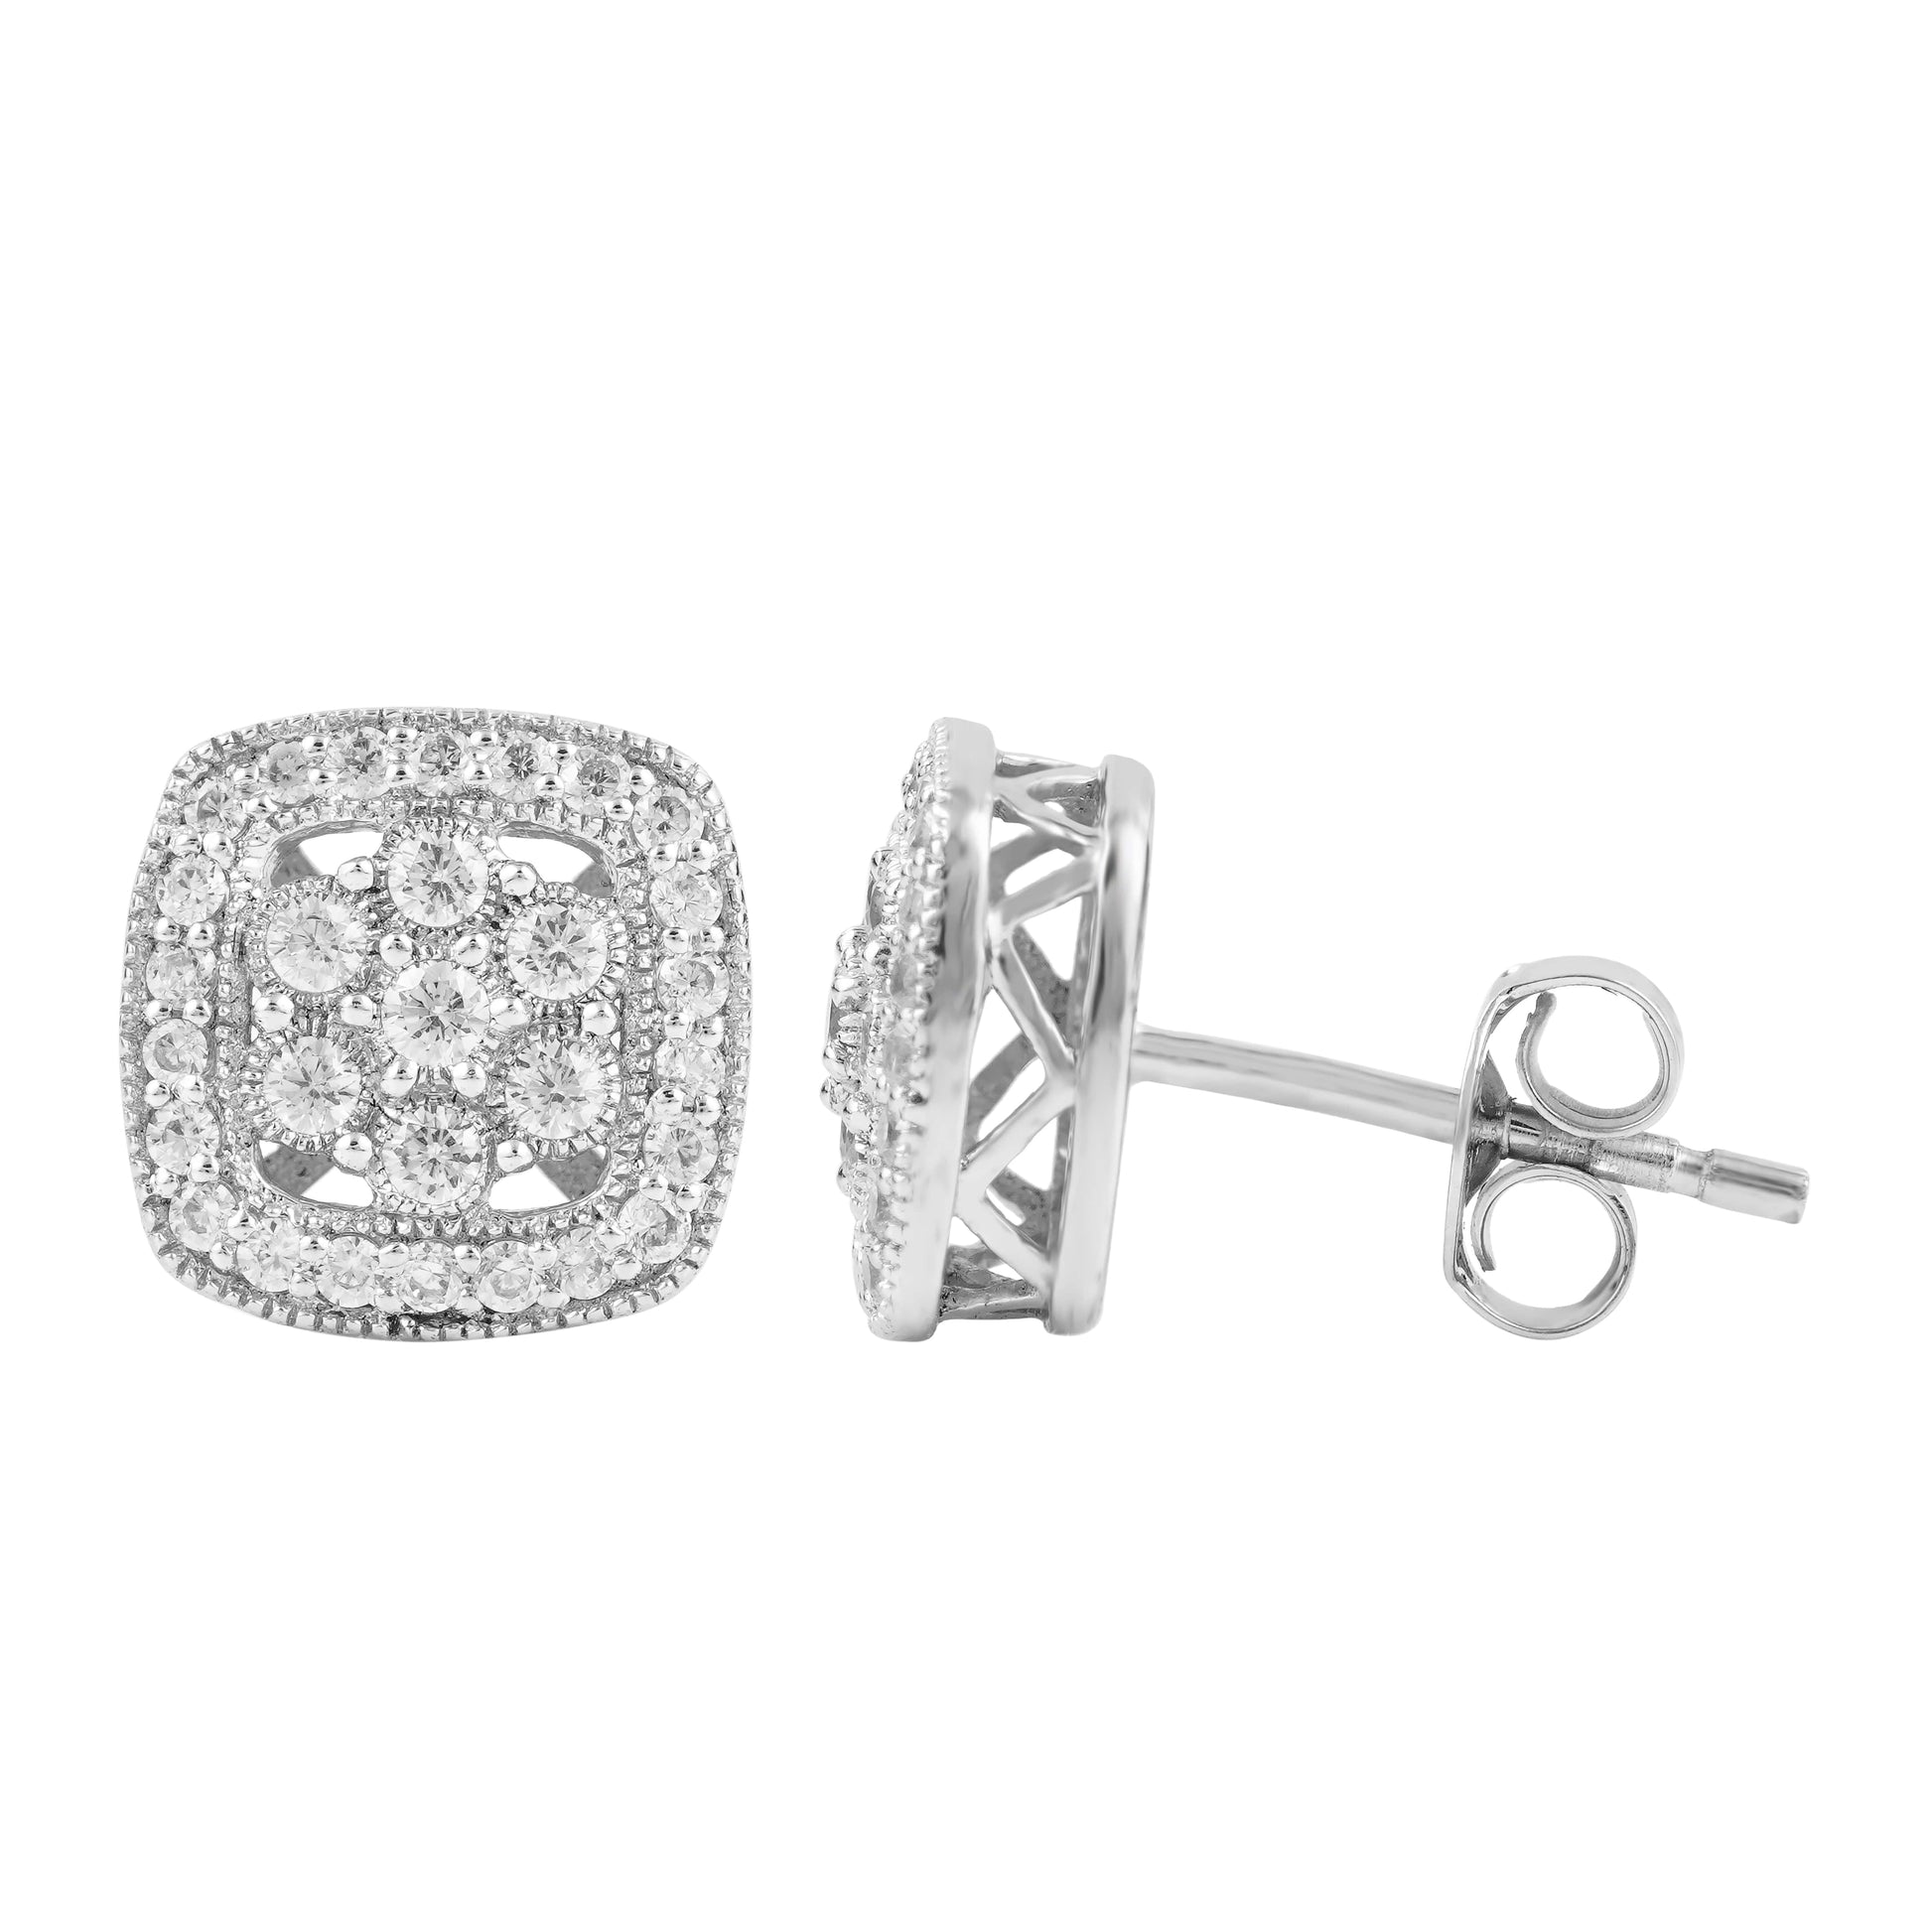 Shop Affordable Diamond Stud Earrings